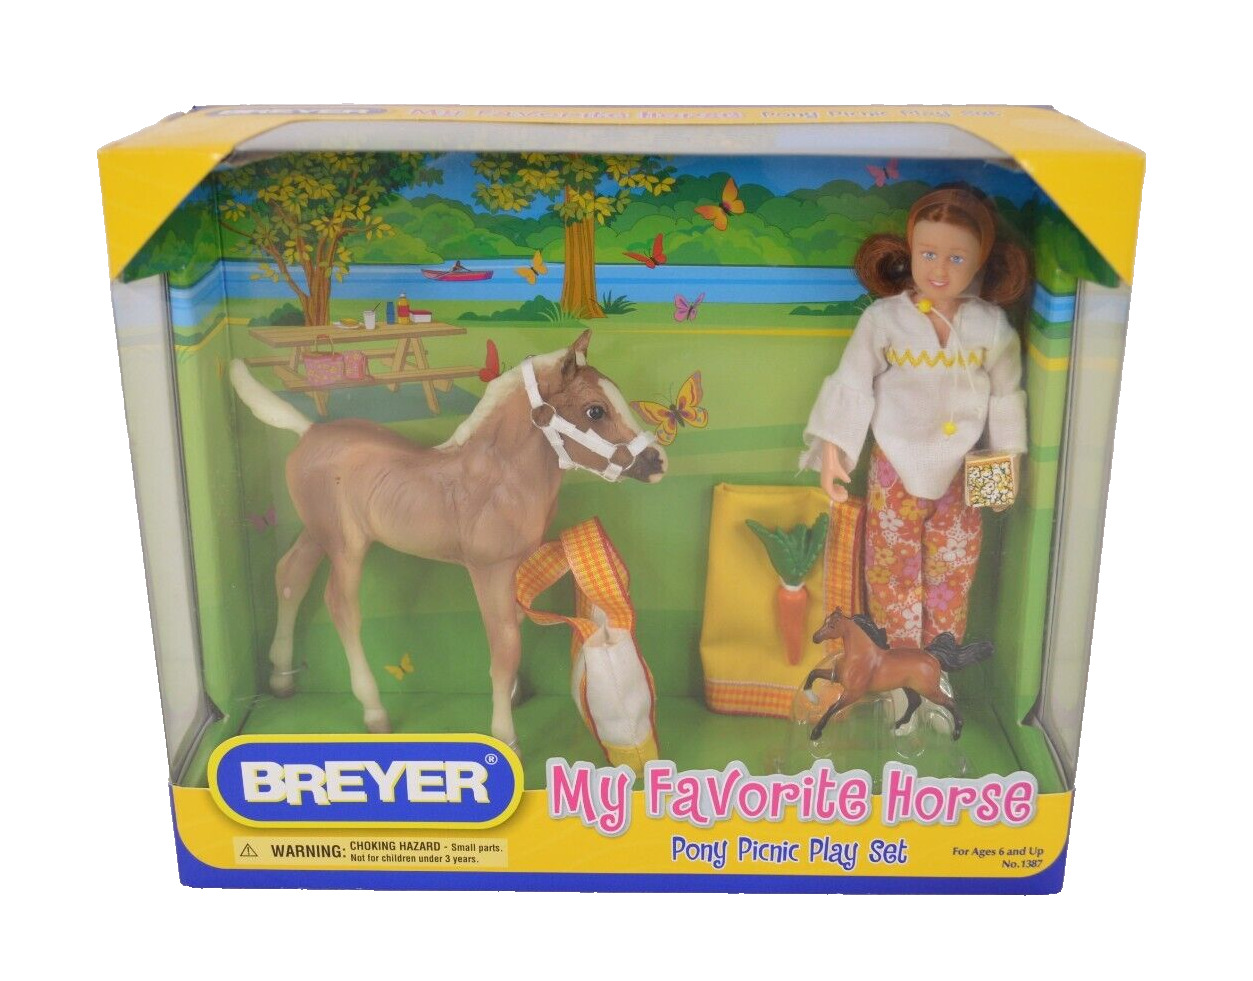 Breyer My Favorite Horse Pony Picnic Play Set 2010 Palomino Foal #1387